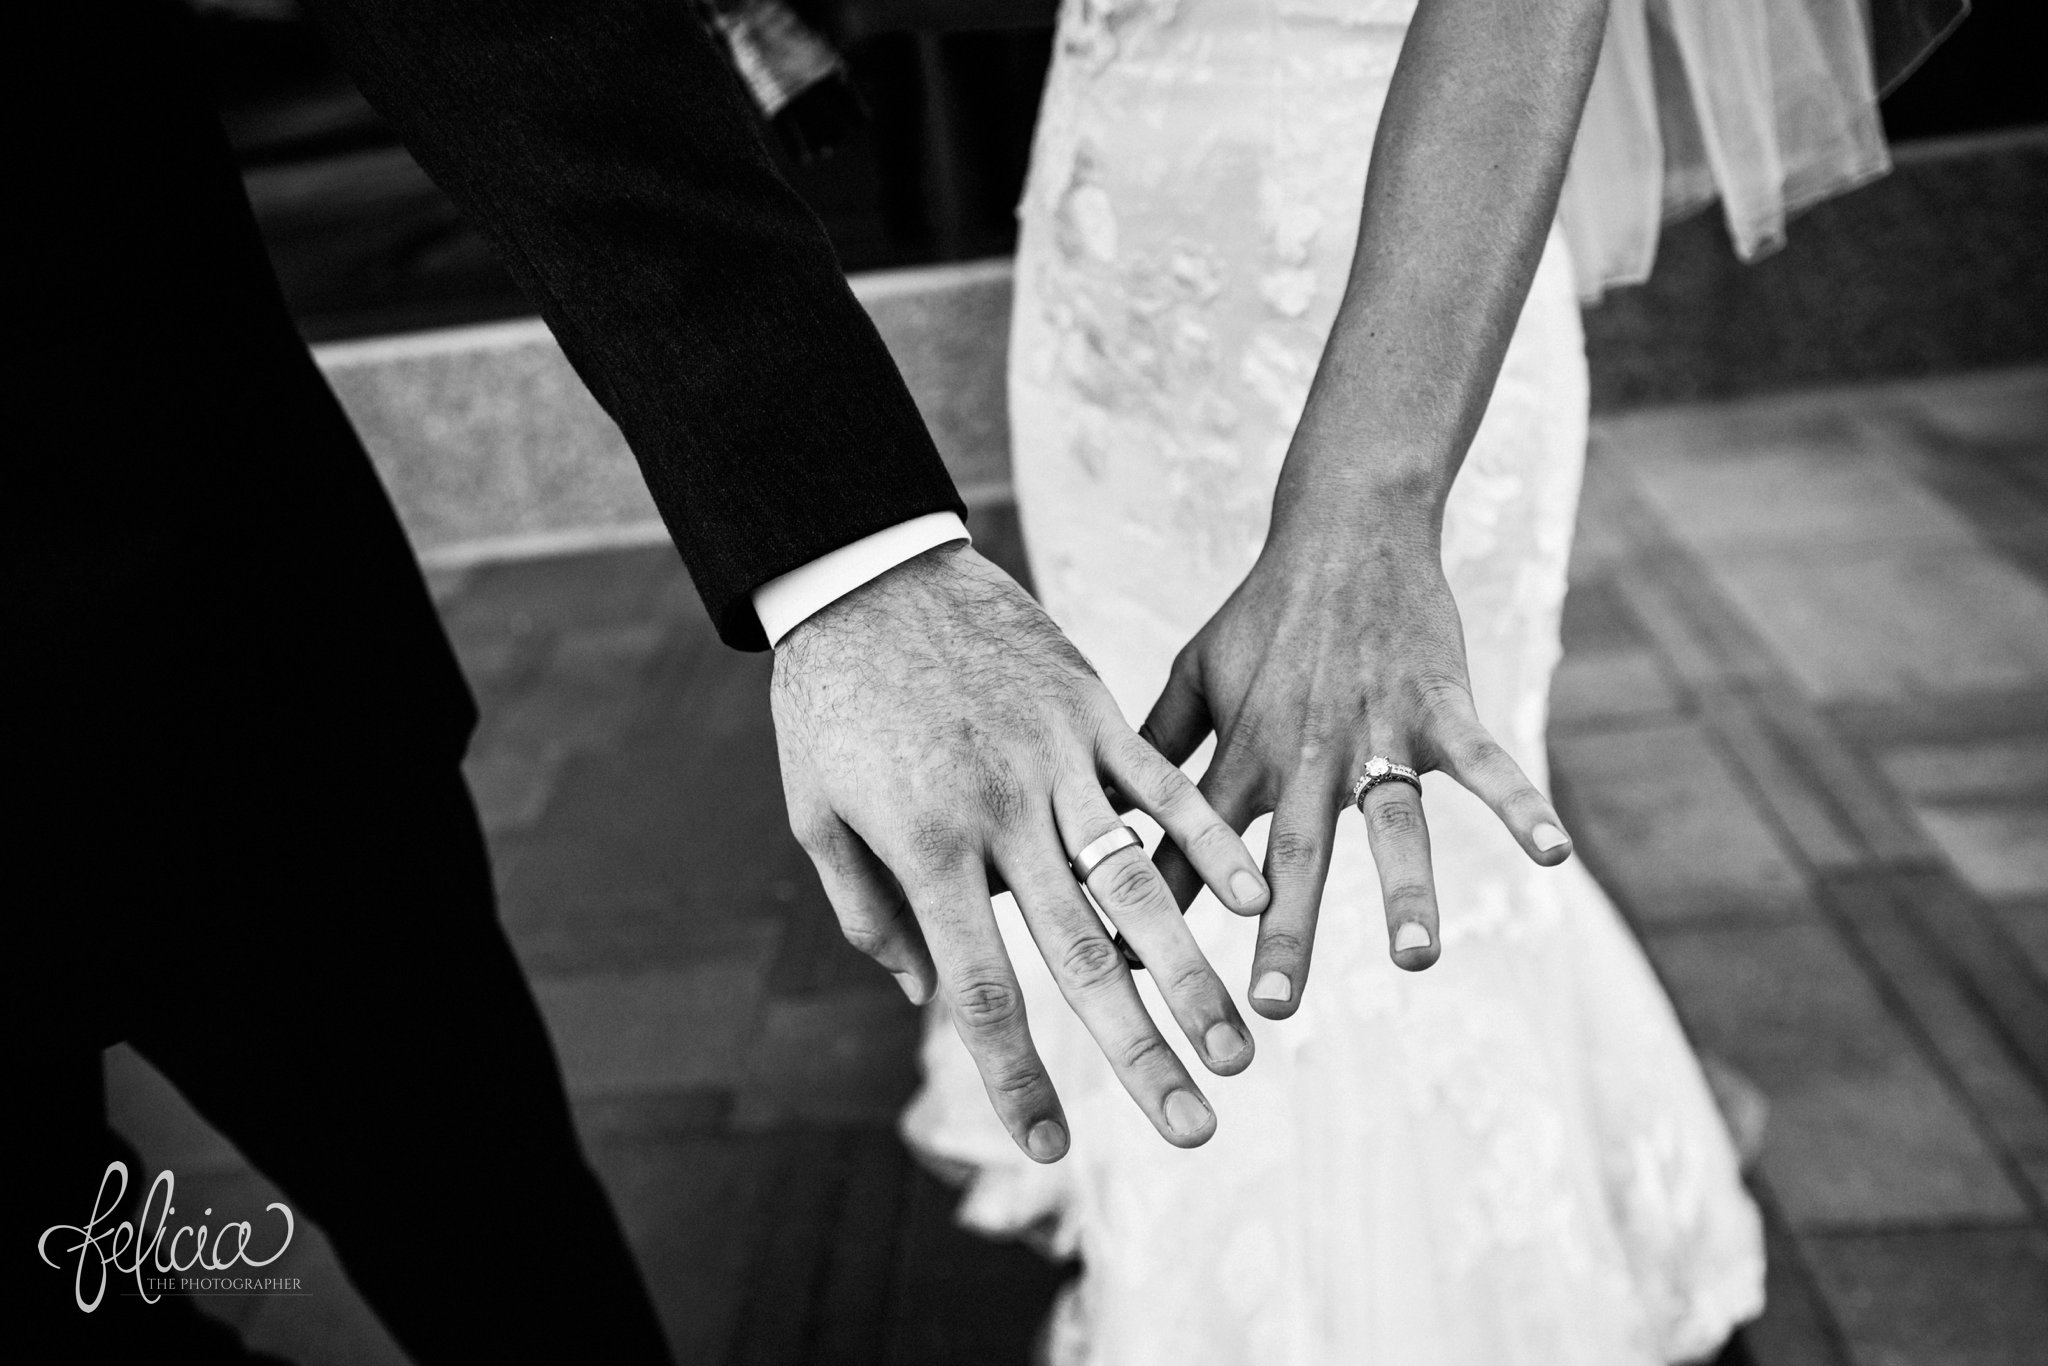 images by feliciathephotographer.com | wedding photographer | kansas city | details | black and white | shane co | rings | 